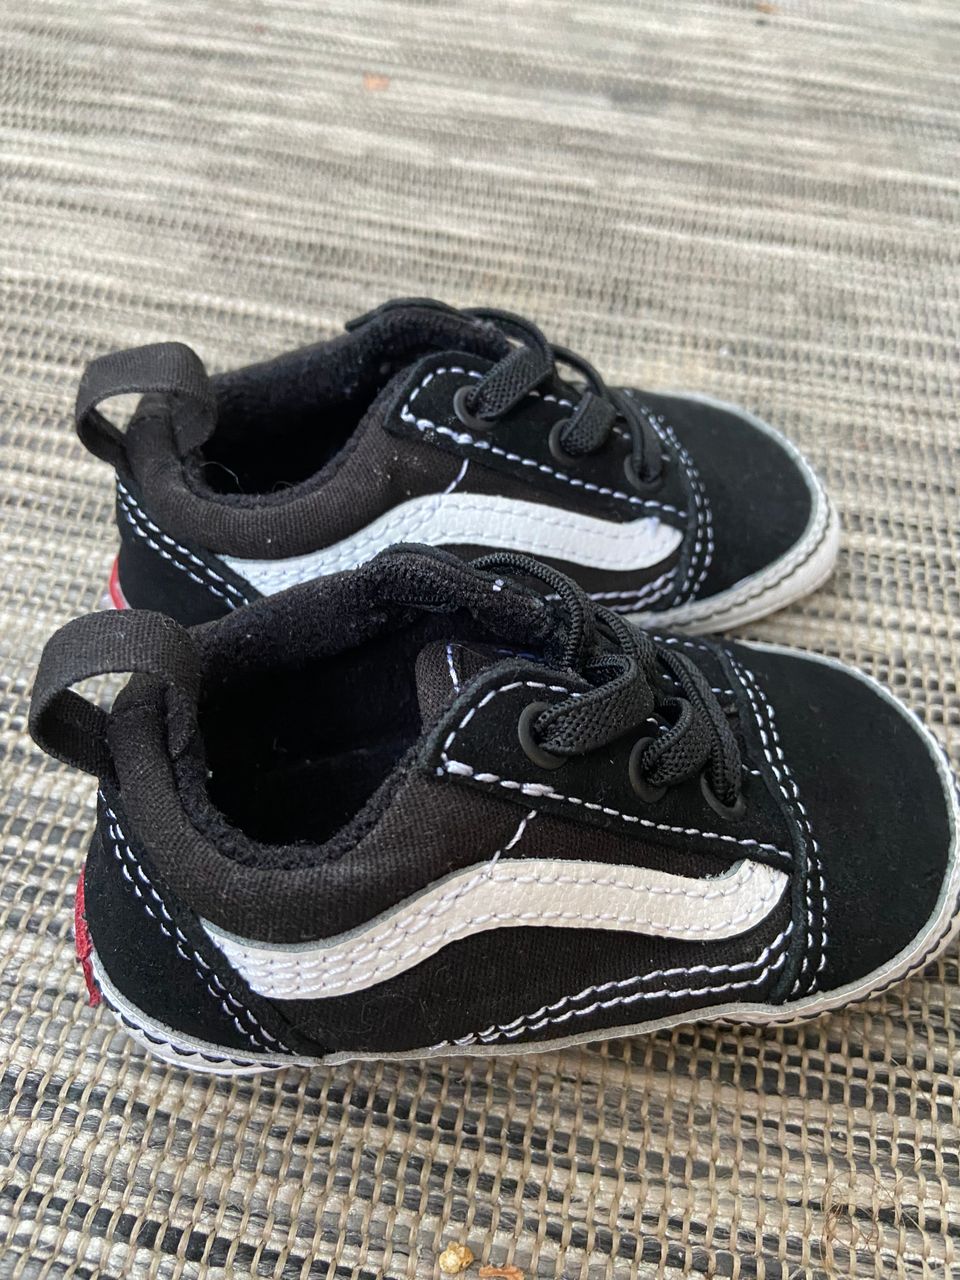 Mustat vauvan vans-kengät